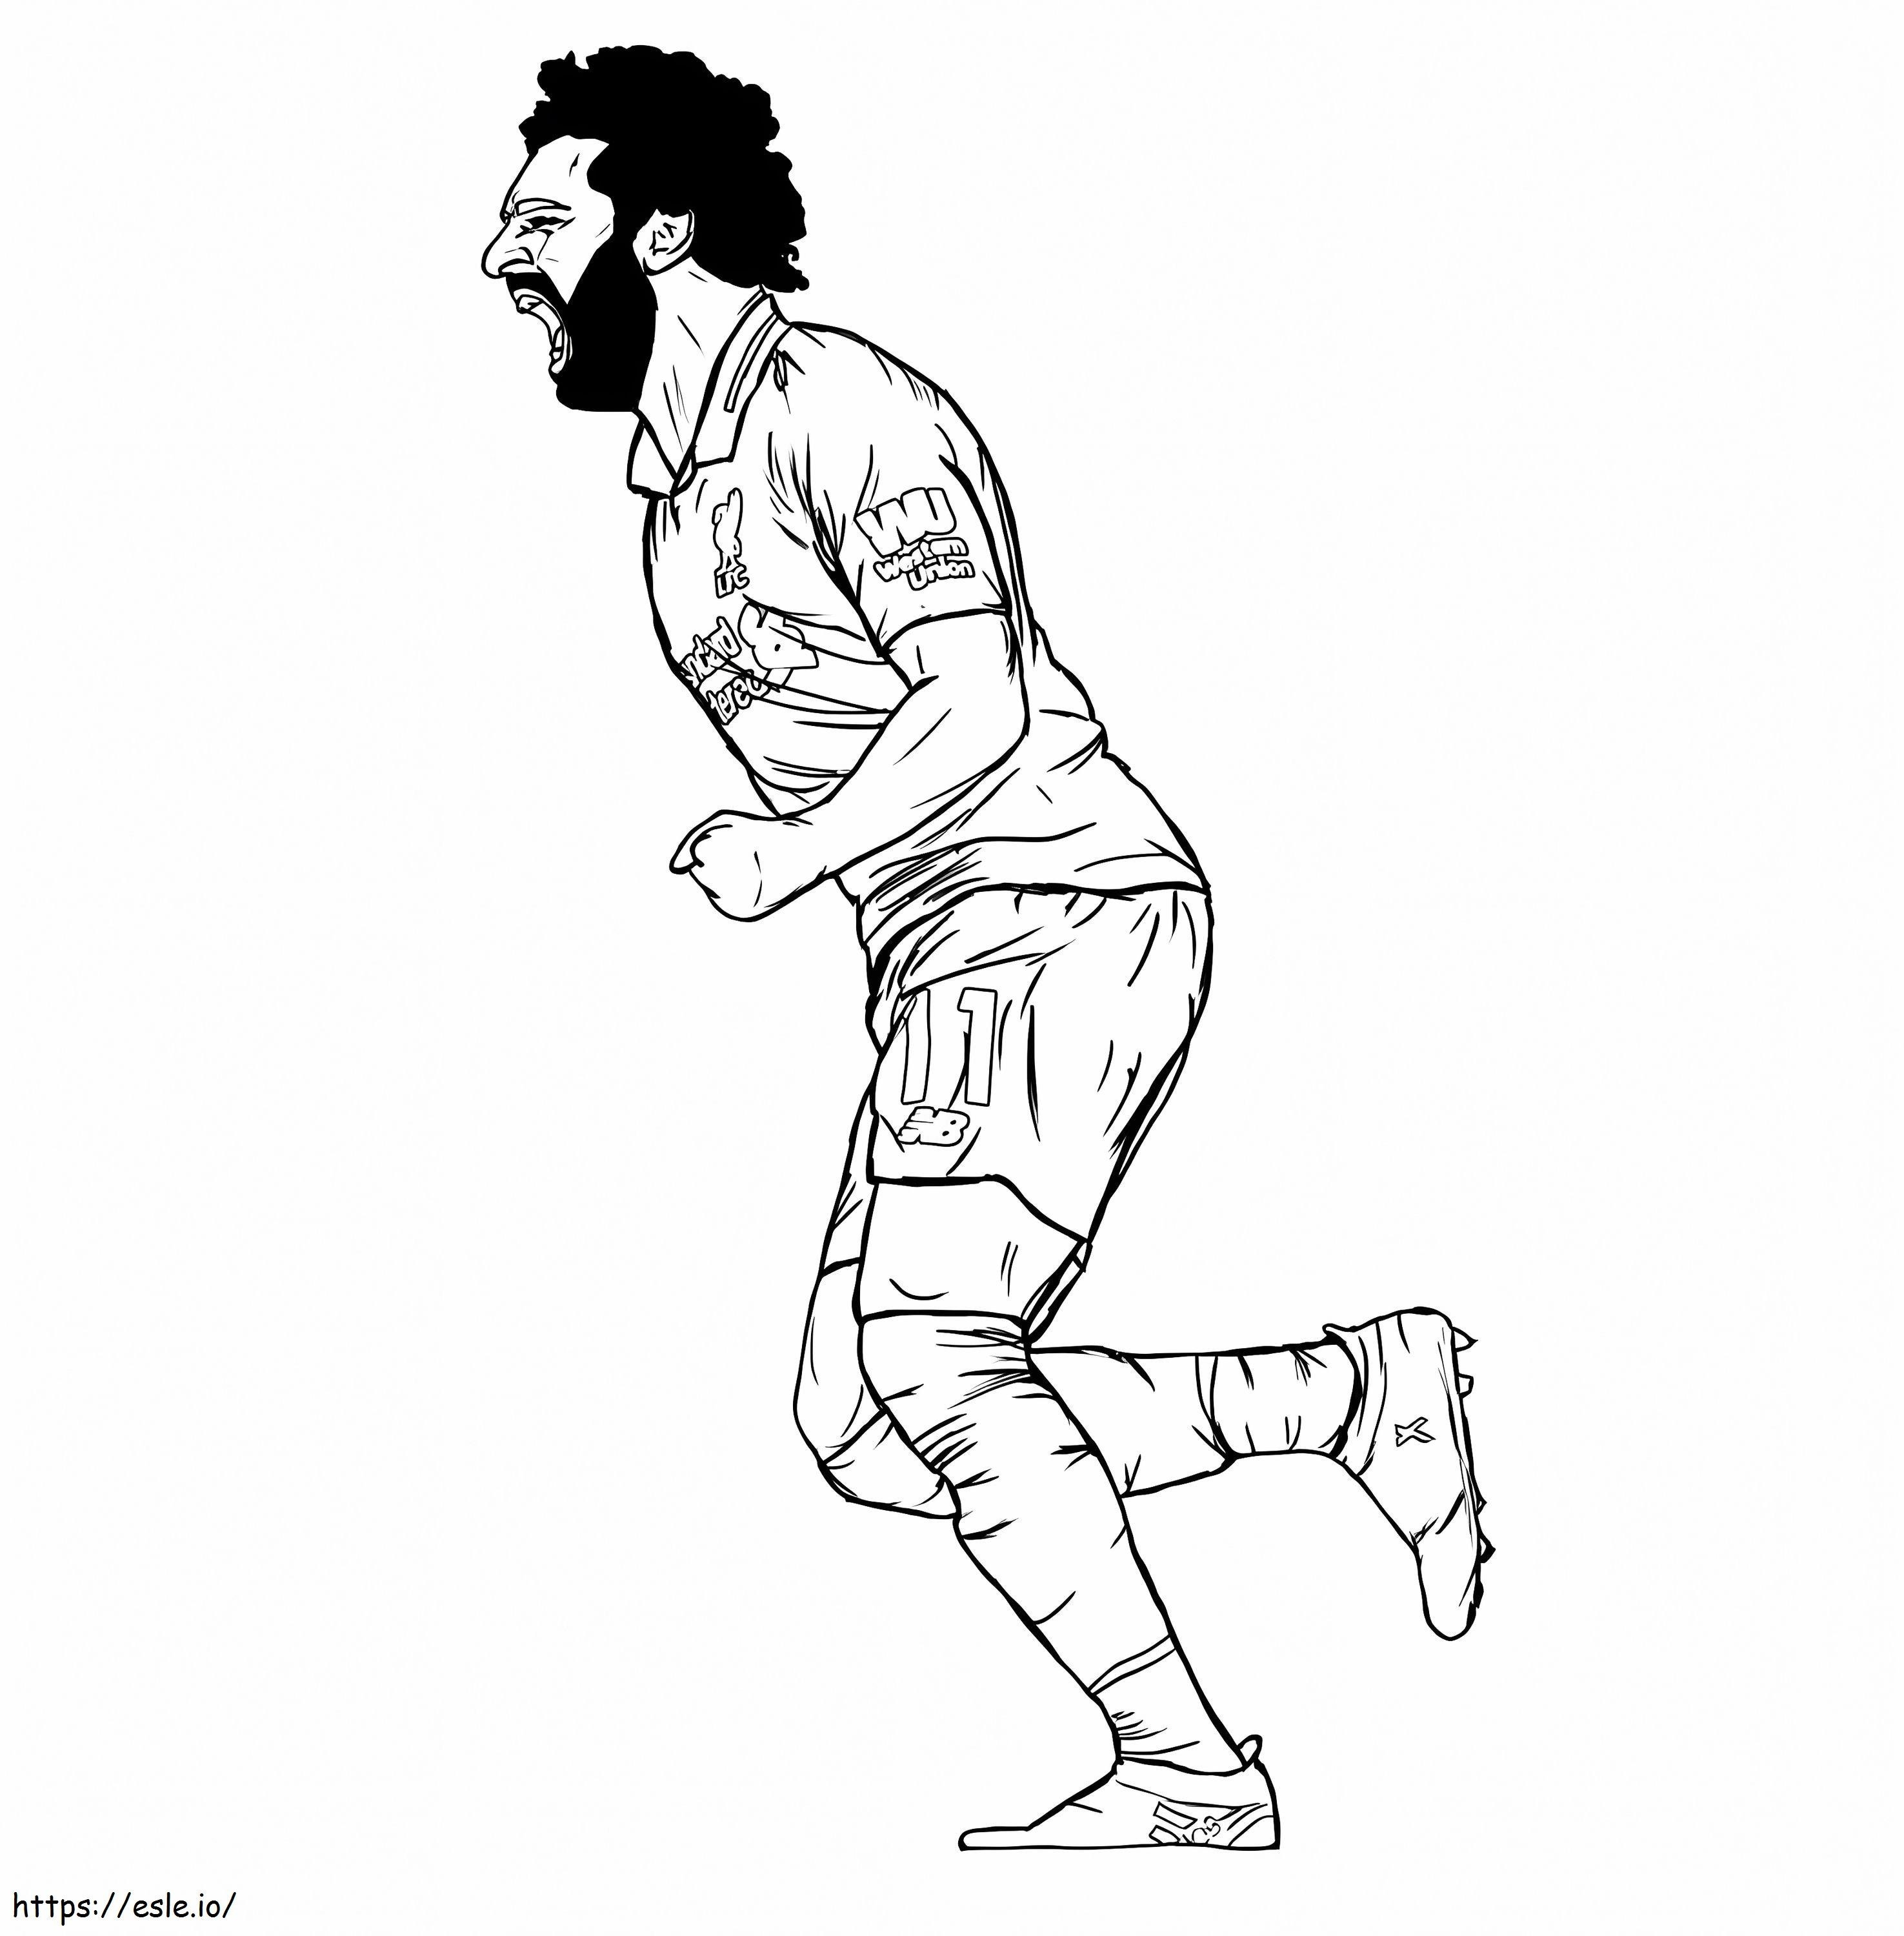 Mohamed Salah 7 kolorowanka